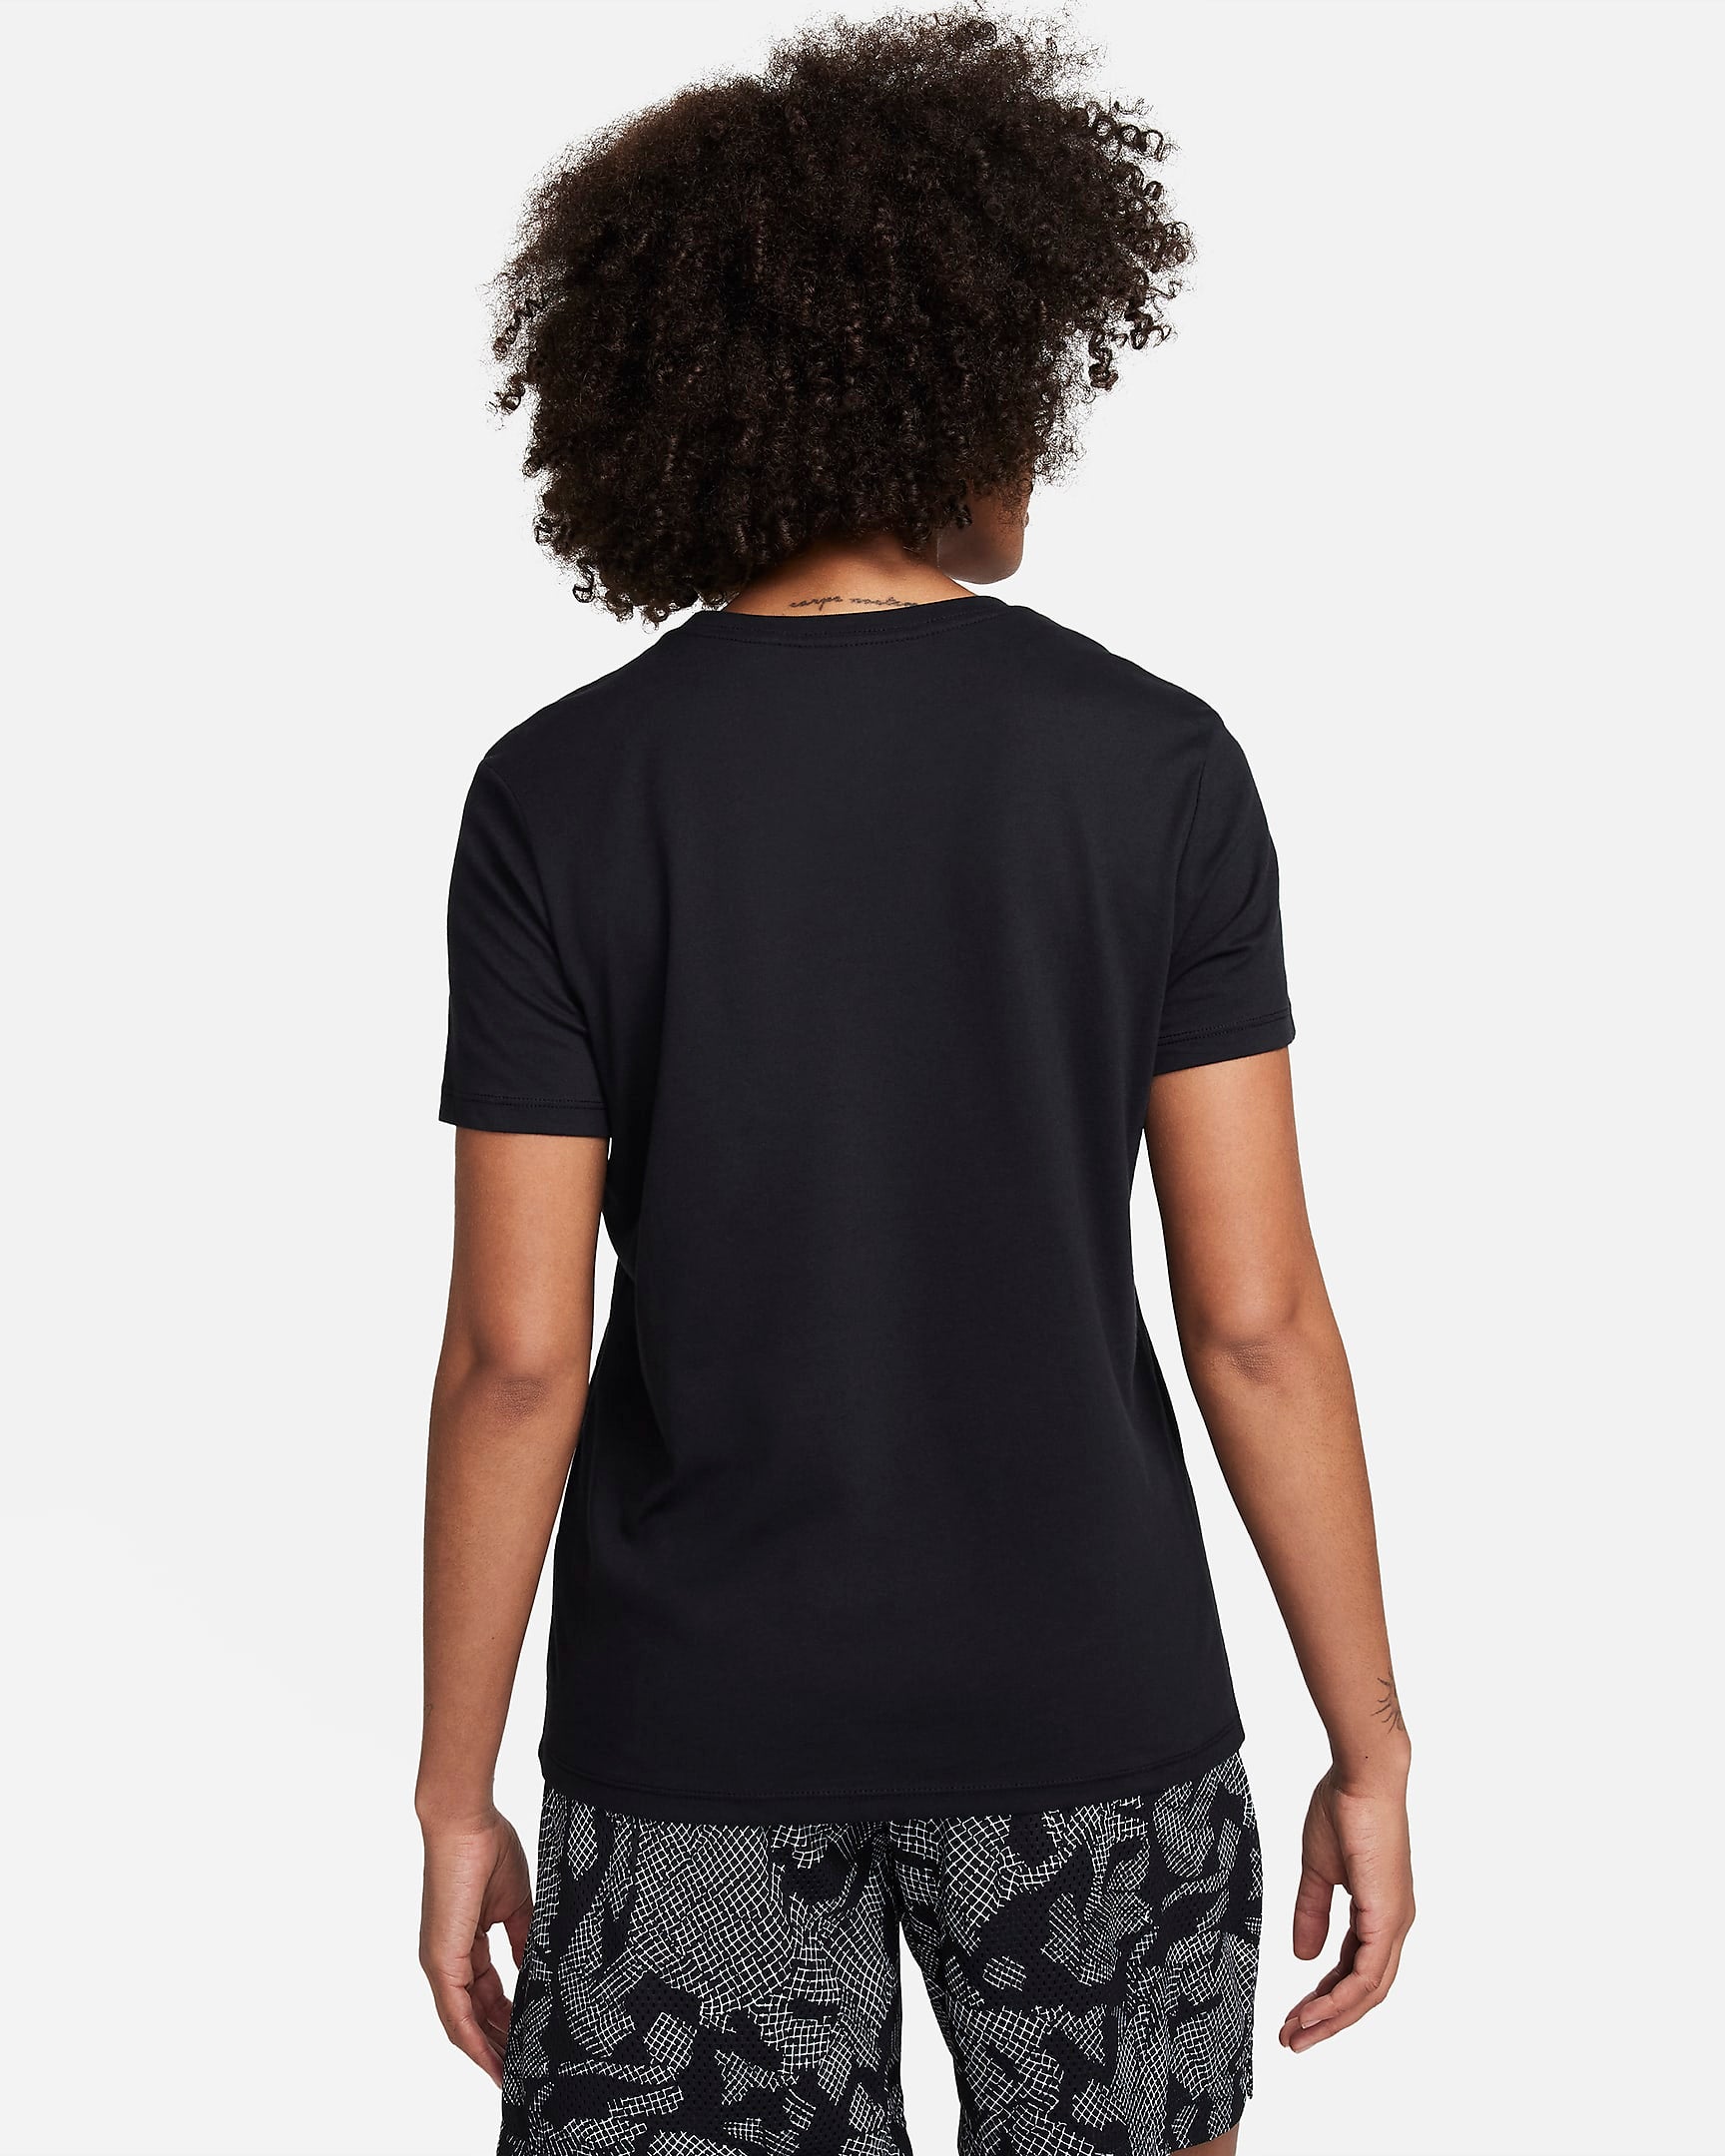 Women's Dri-FIT Graphic T-Shirt - FQ6606